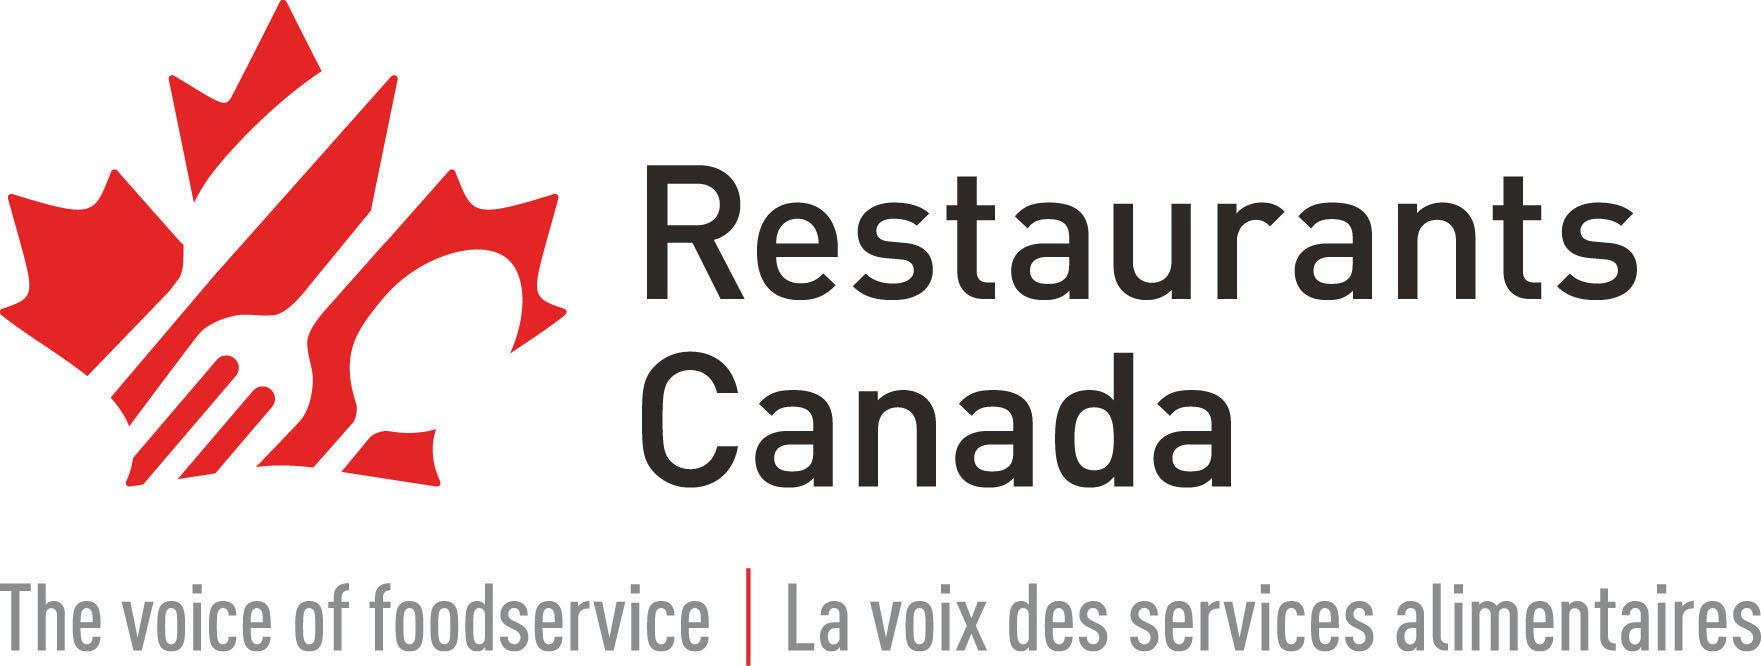 Restaurants Canada E